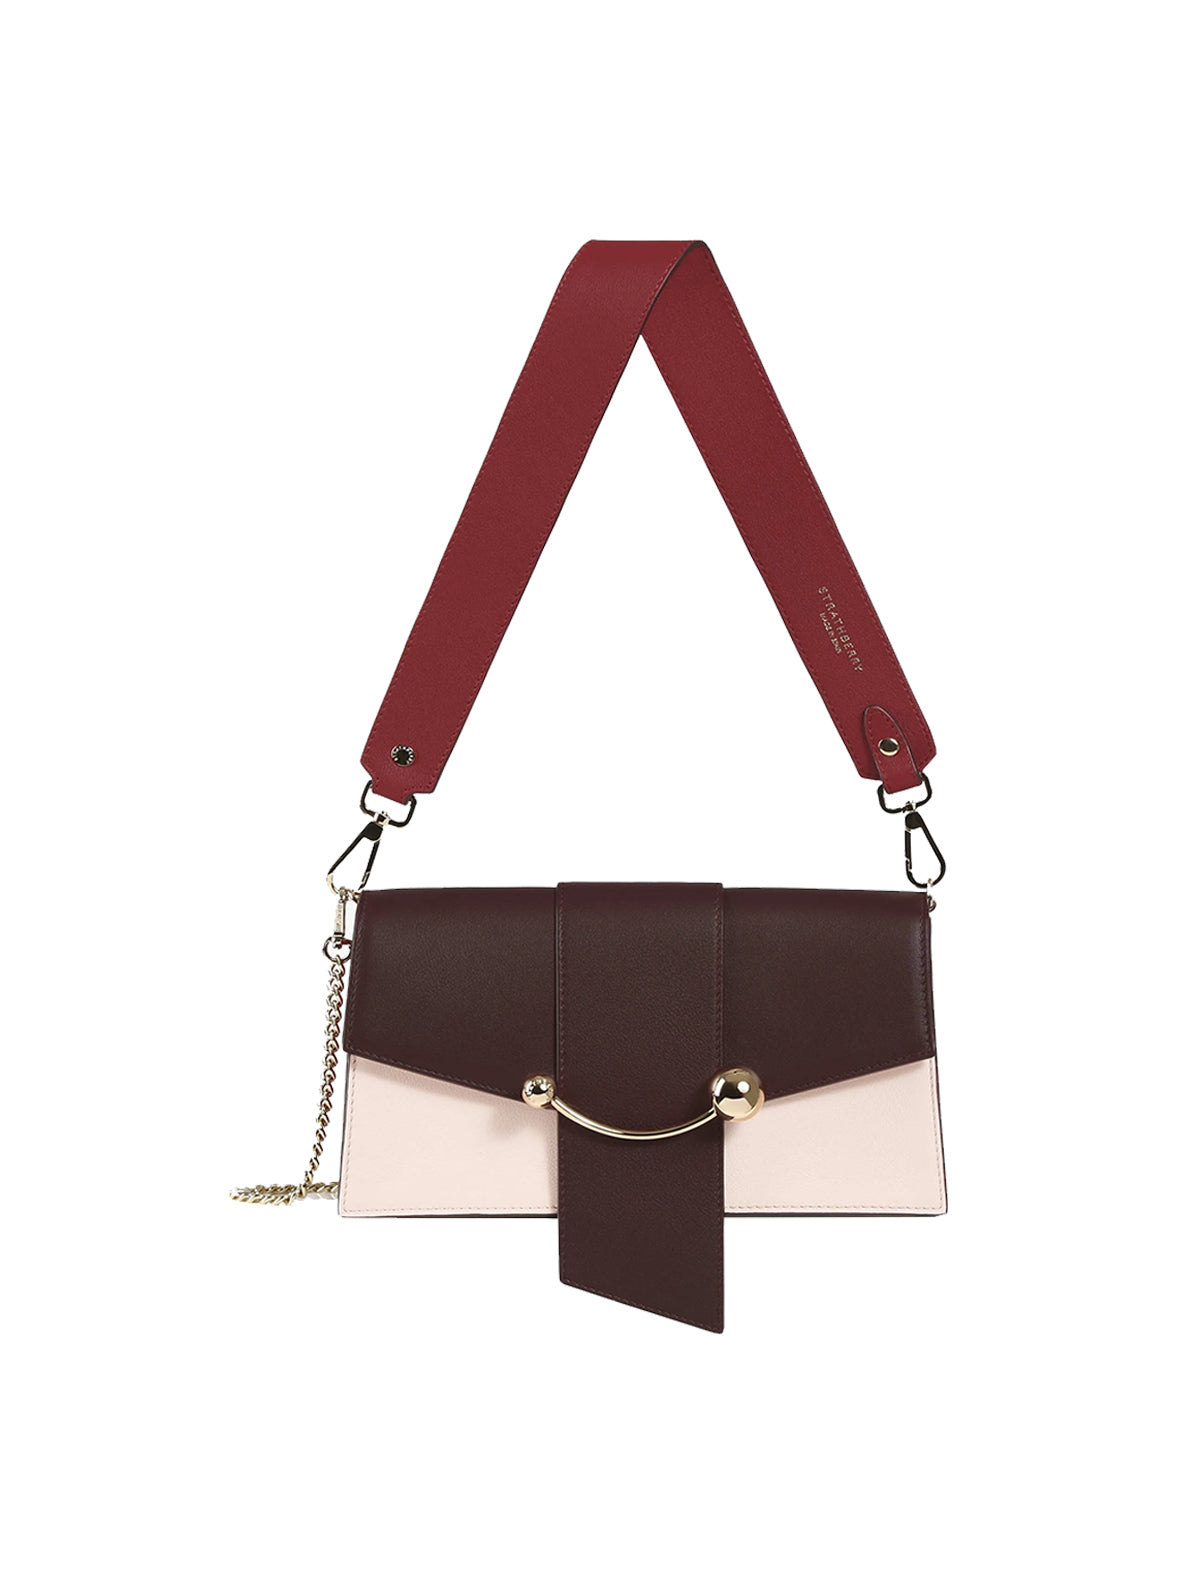 STRATHBERRY Mini Crescent Bag in Claret/Soft Pink/Burgundy